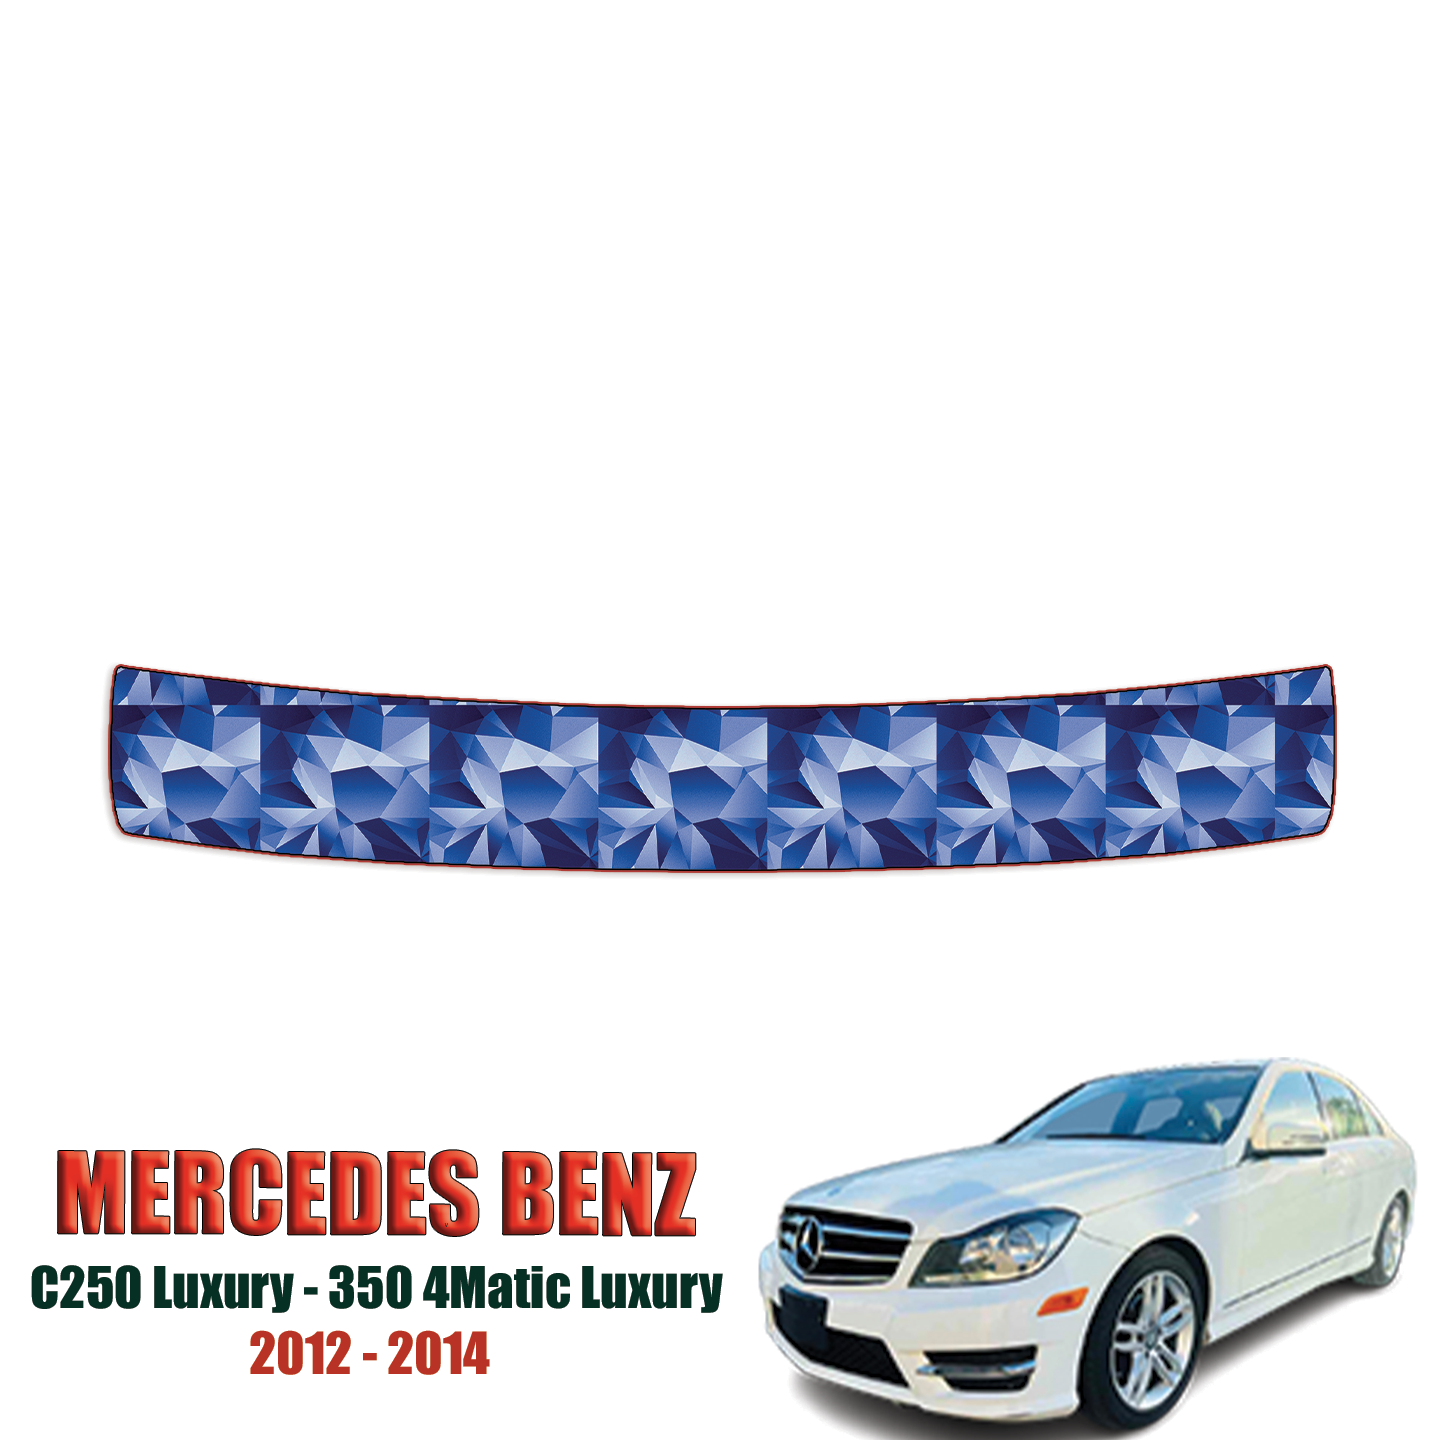 2012-2014 Mercedes Benz C-Class, C250 Luxury, 300 4matic Luxury Precut Paint Protection Kit – Bumper Step